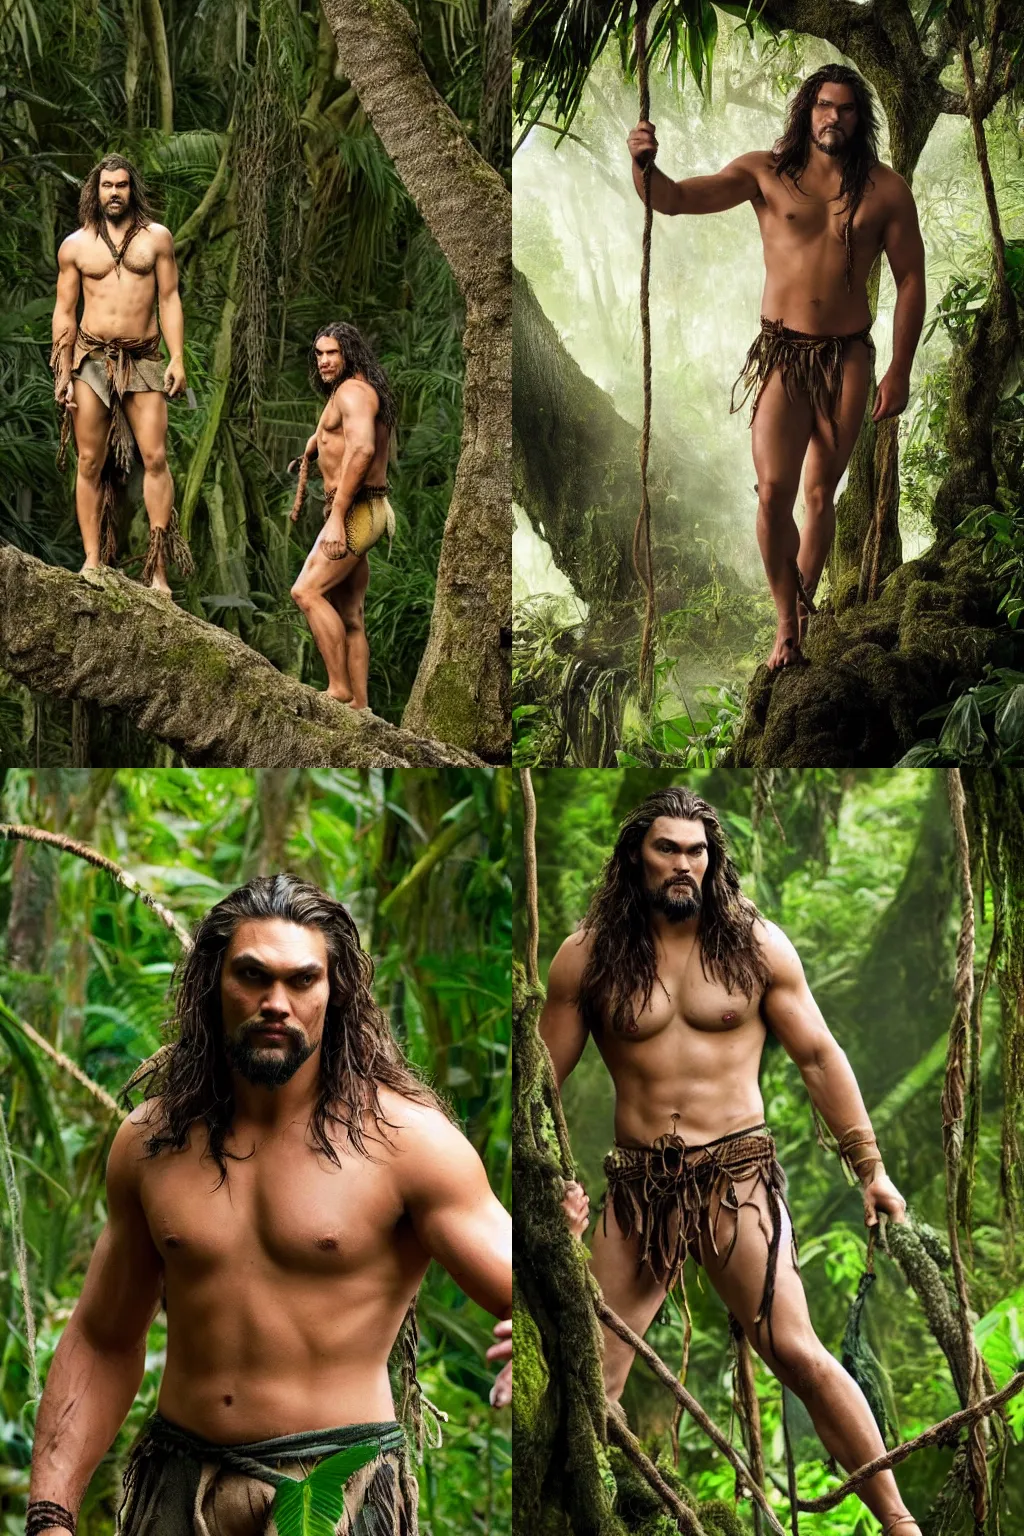 Prompt: Jereme Momoa as Tarzan, lord of the jungle, professional photo, color.